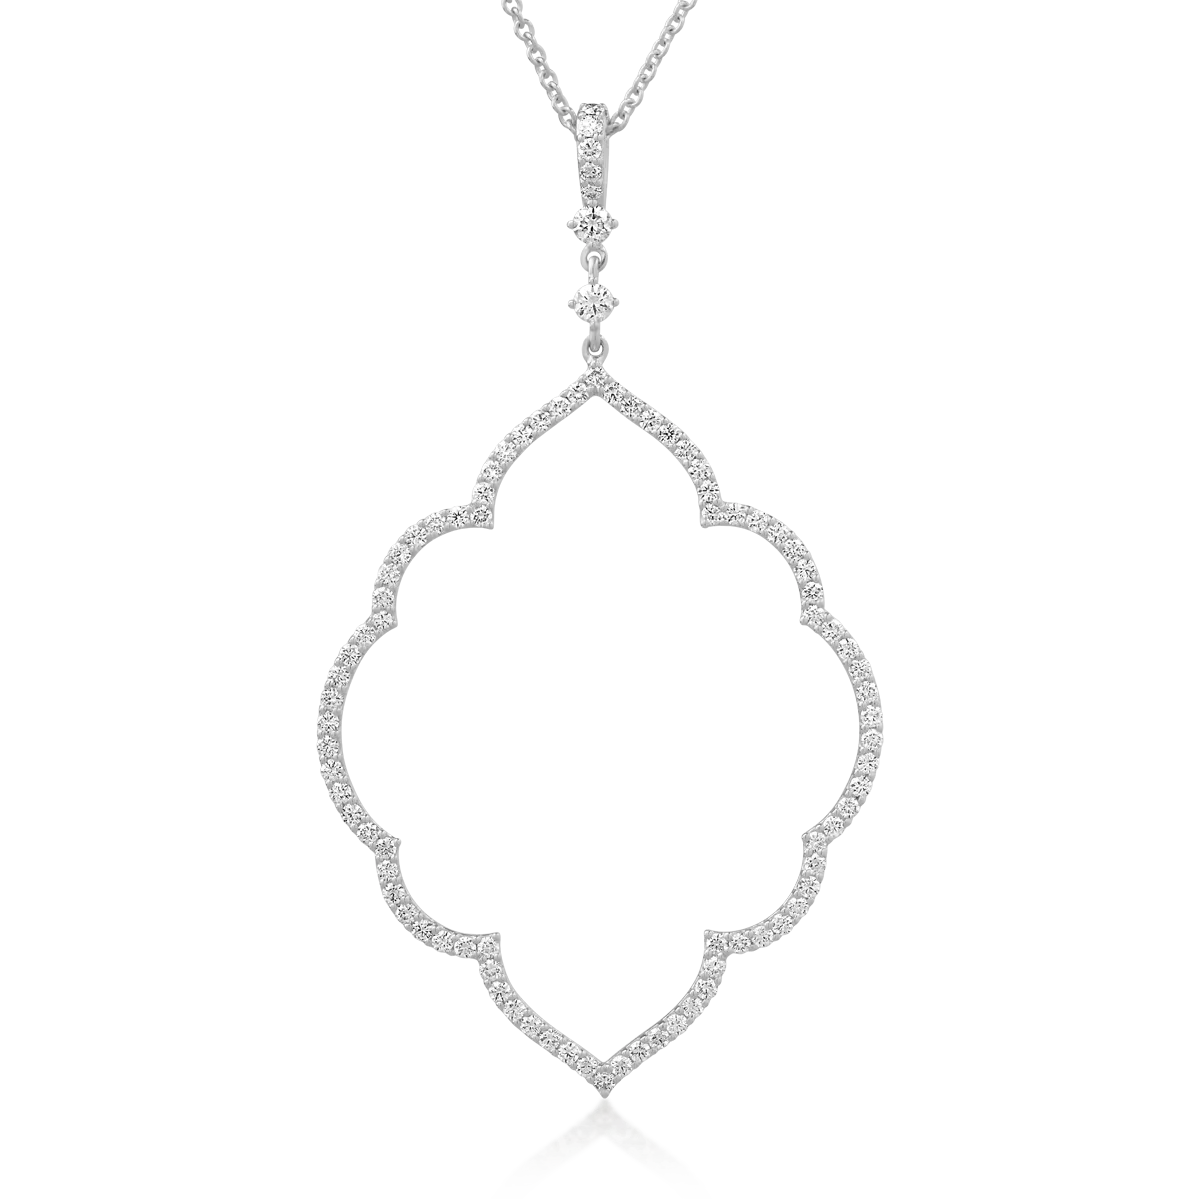 18K white gold pendant chain with 1.27ct diamonds